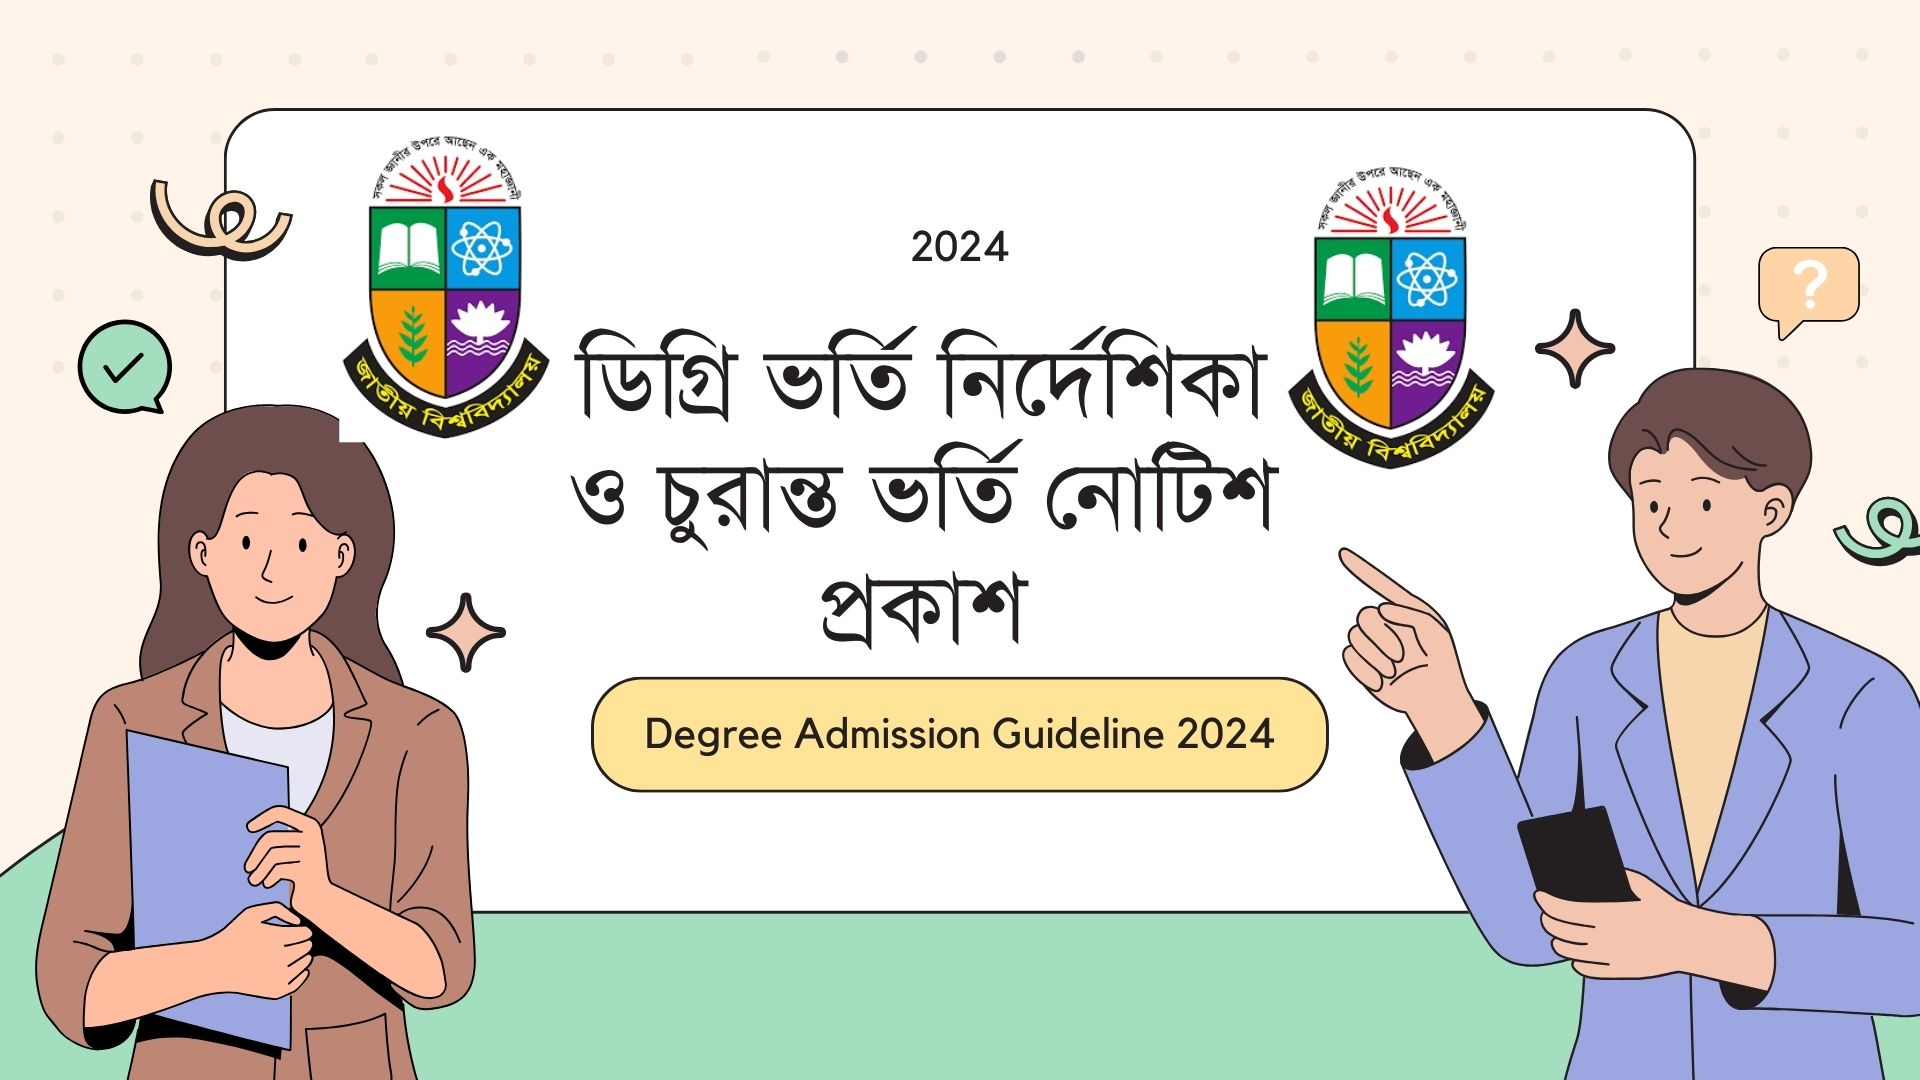 Degree Admission Guideline 2024 Published